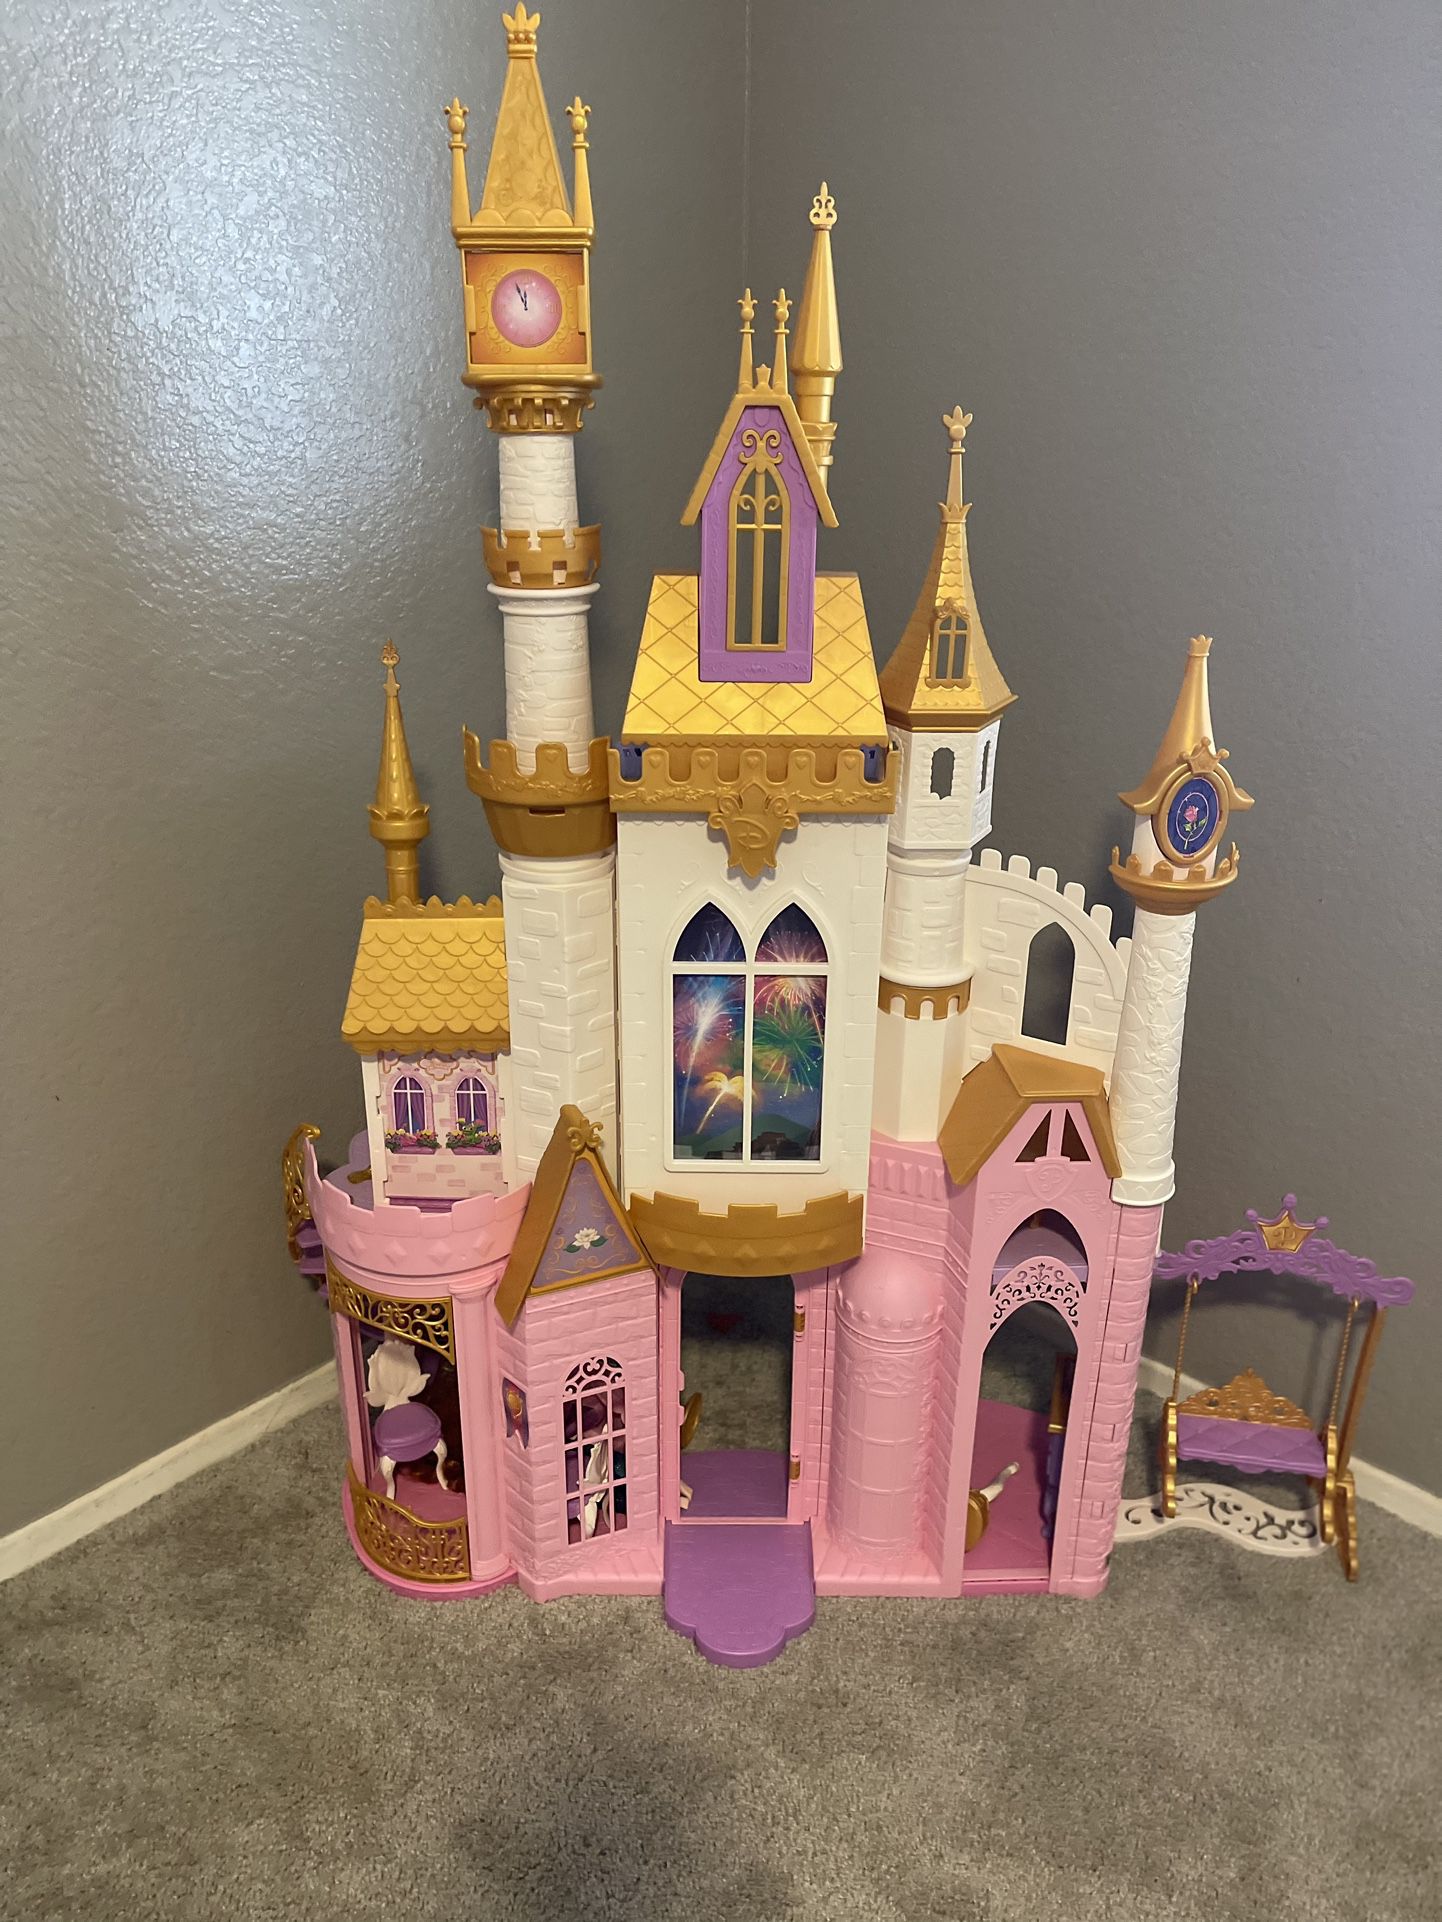 Disney Princess castle with Princes Barbie’s